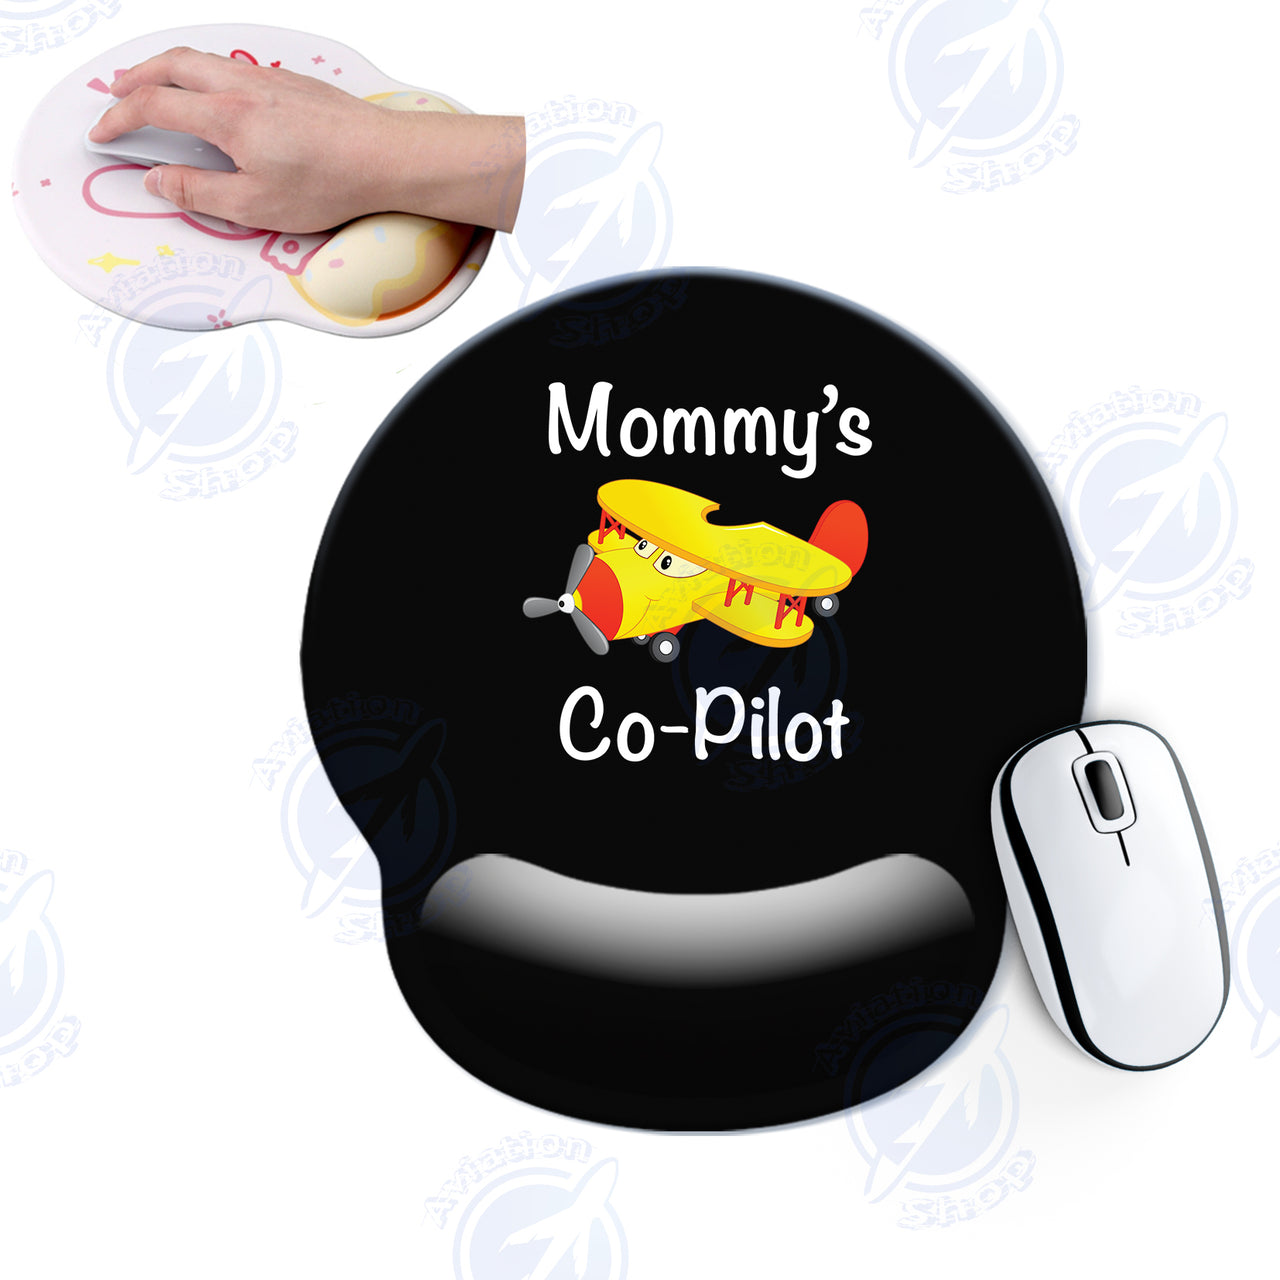 Mommy's Co-Pilot (Propeller2) Designed Ergonomic Mouse Pads